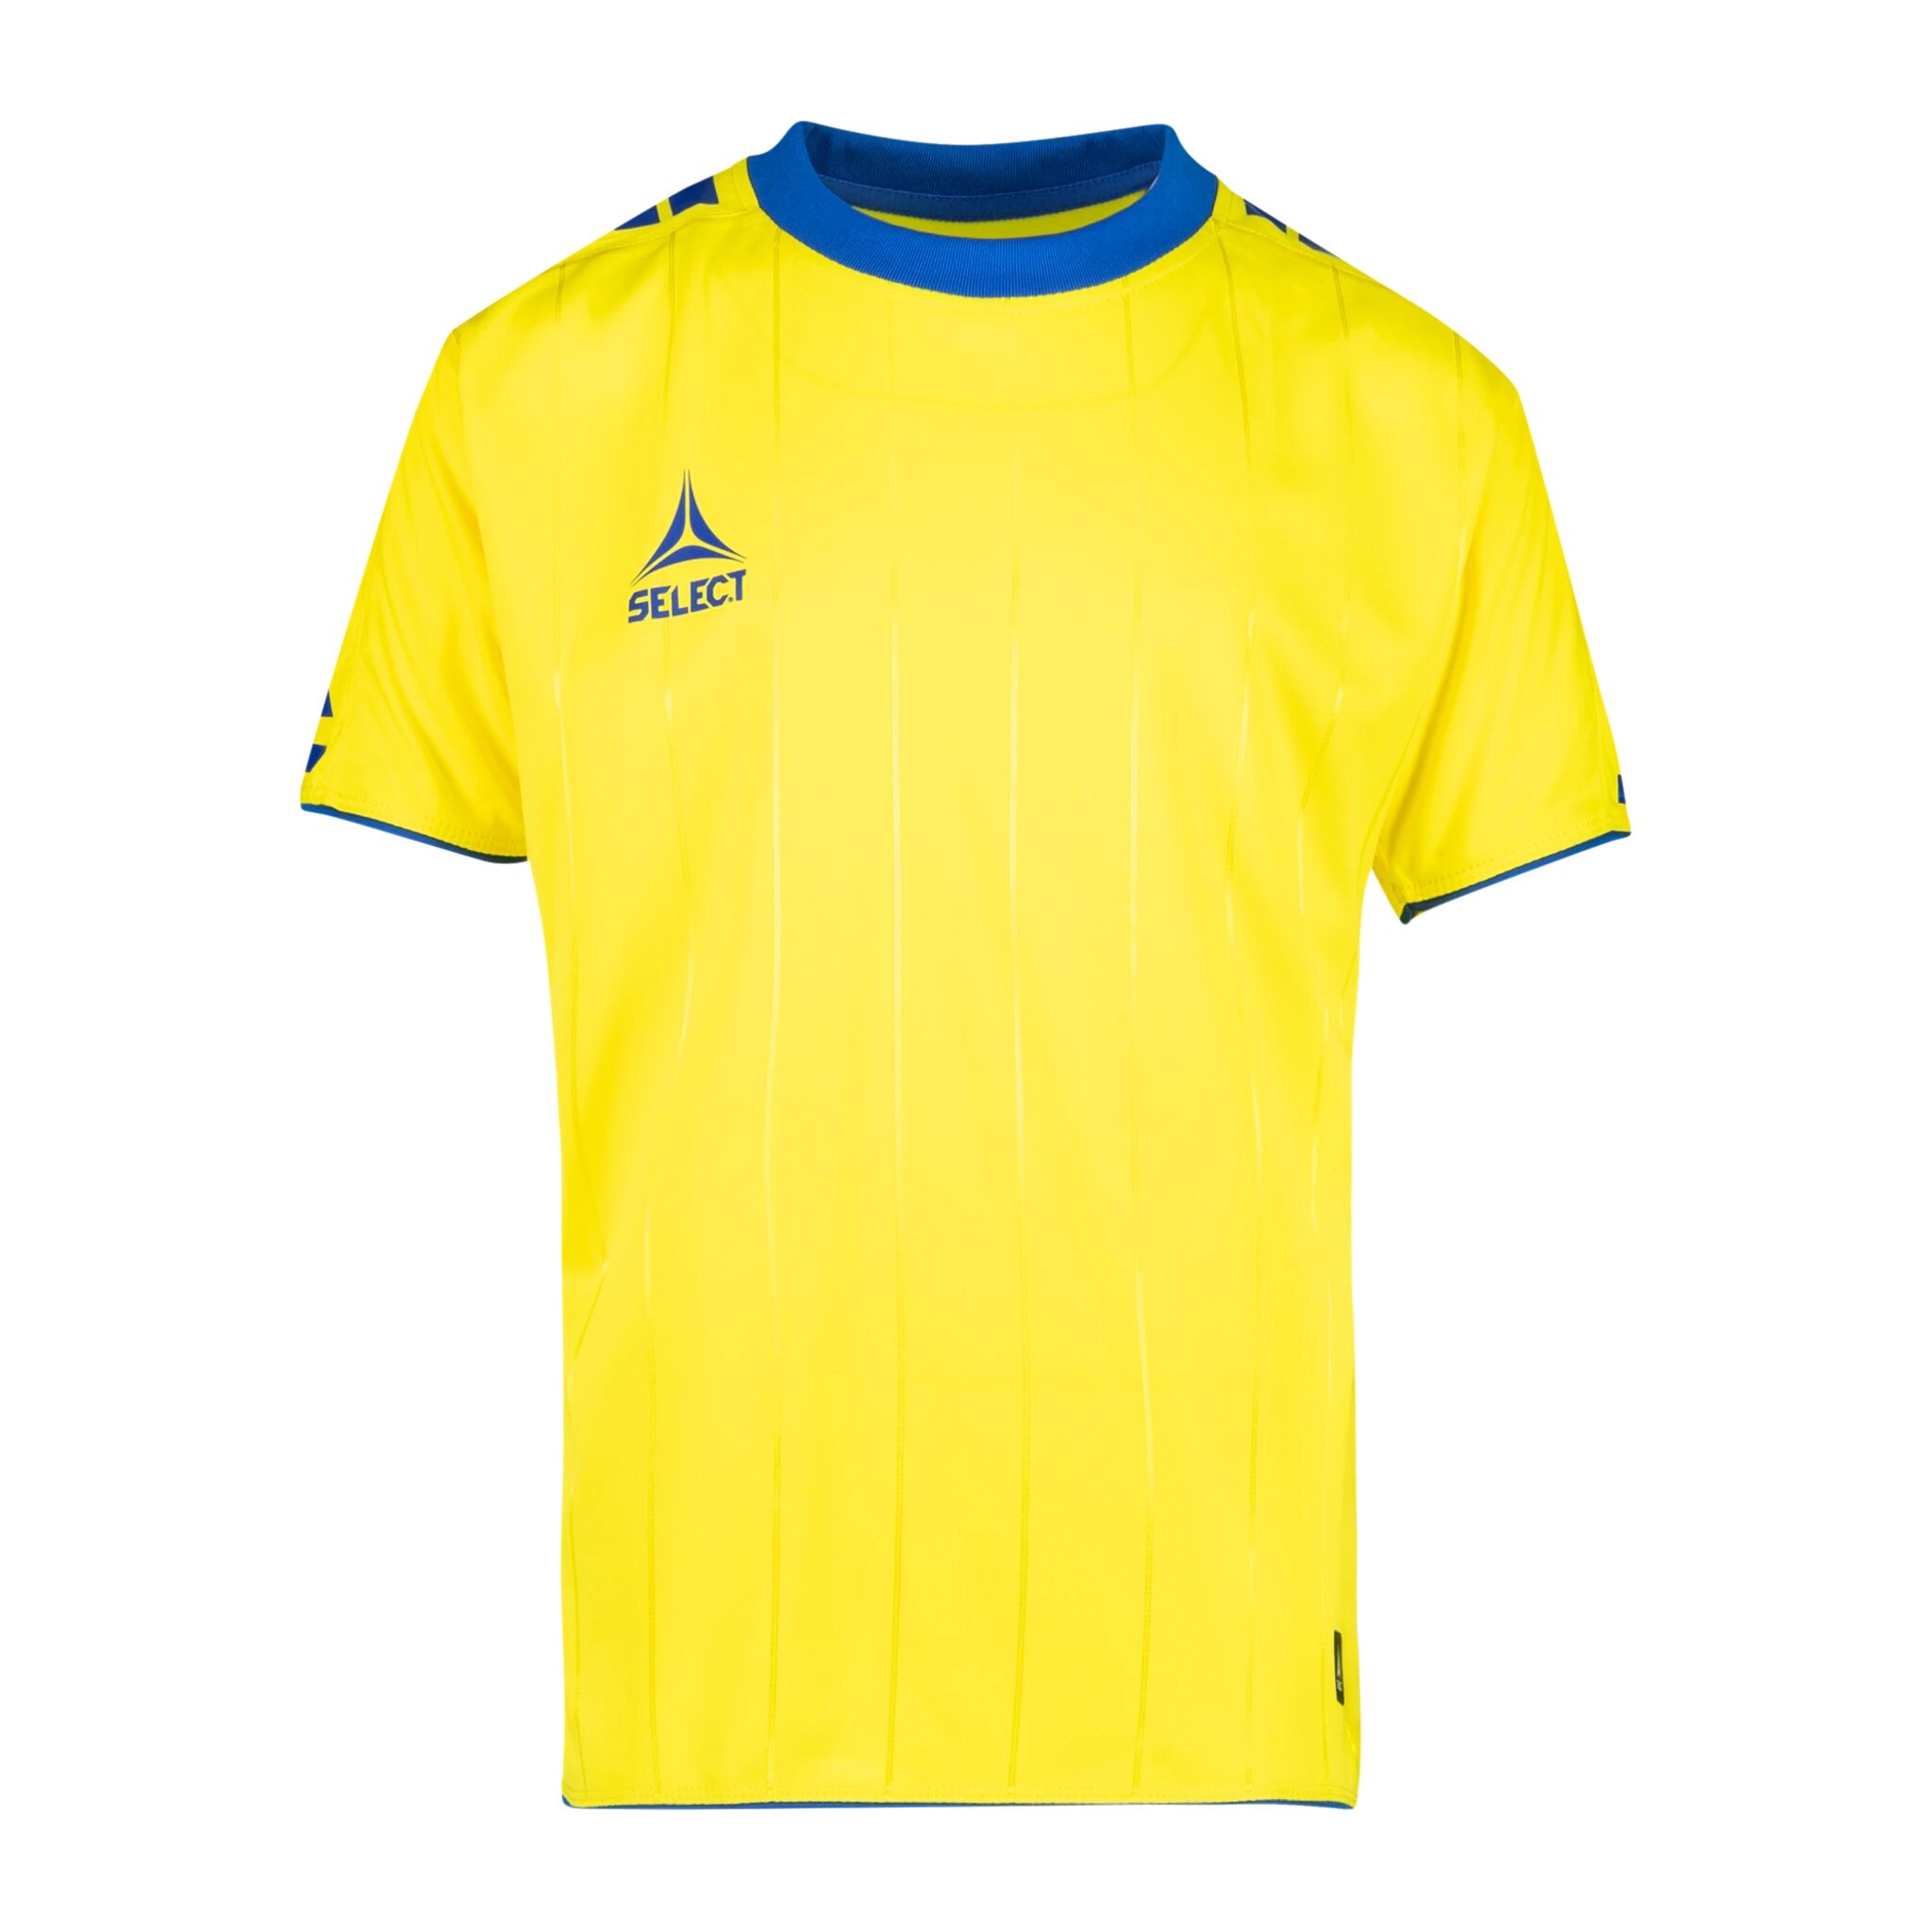 Select Player shirt S/S Argentina, fotballtrøye senior 116 Yellow/Blue